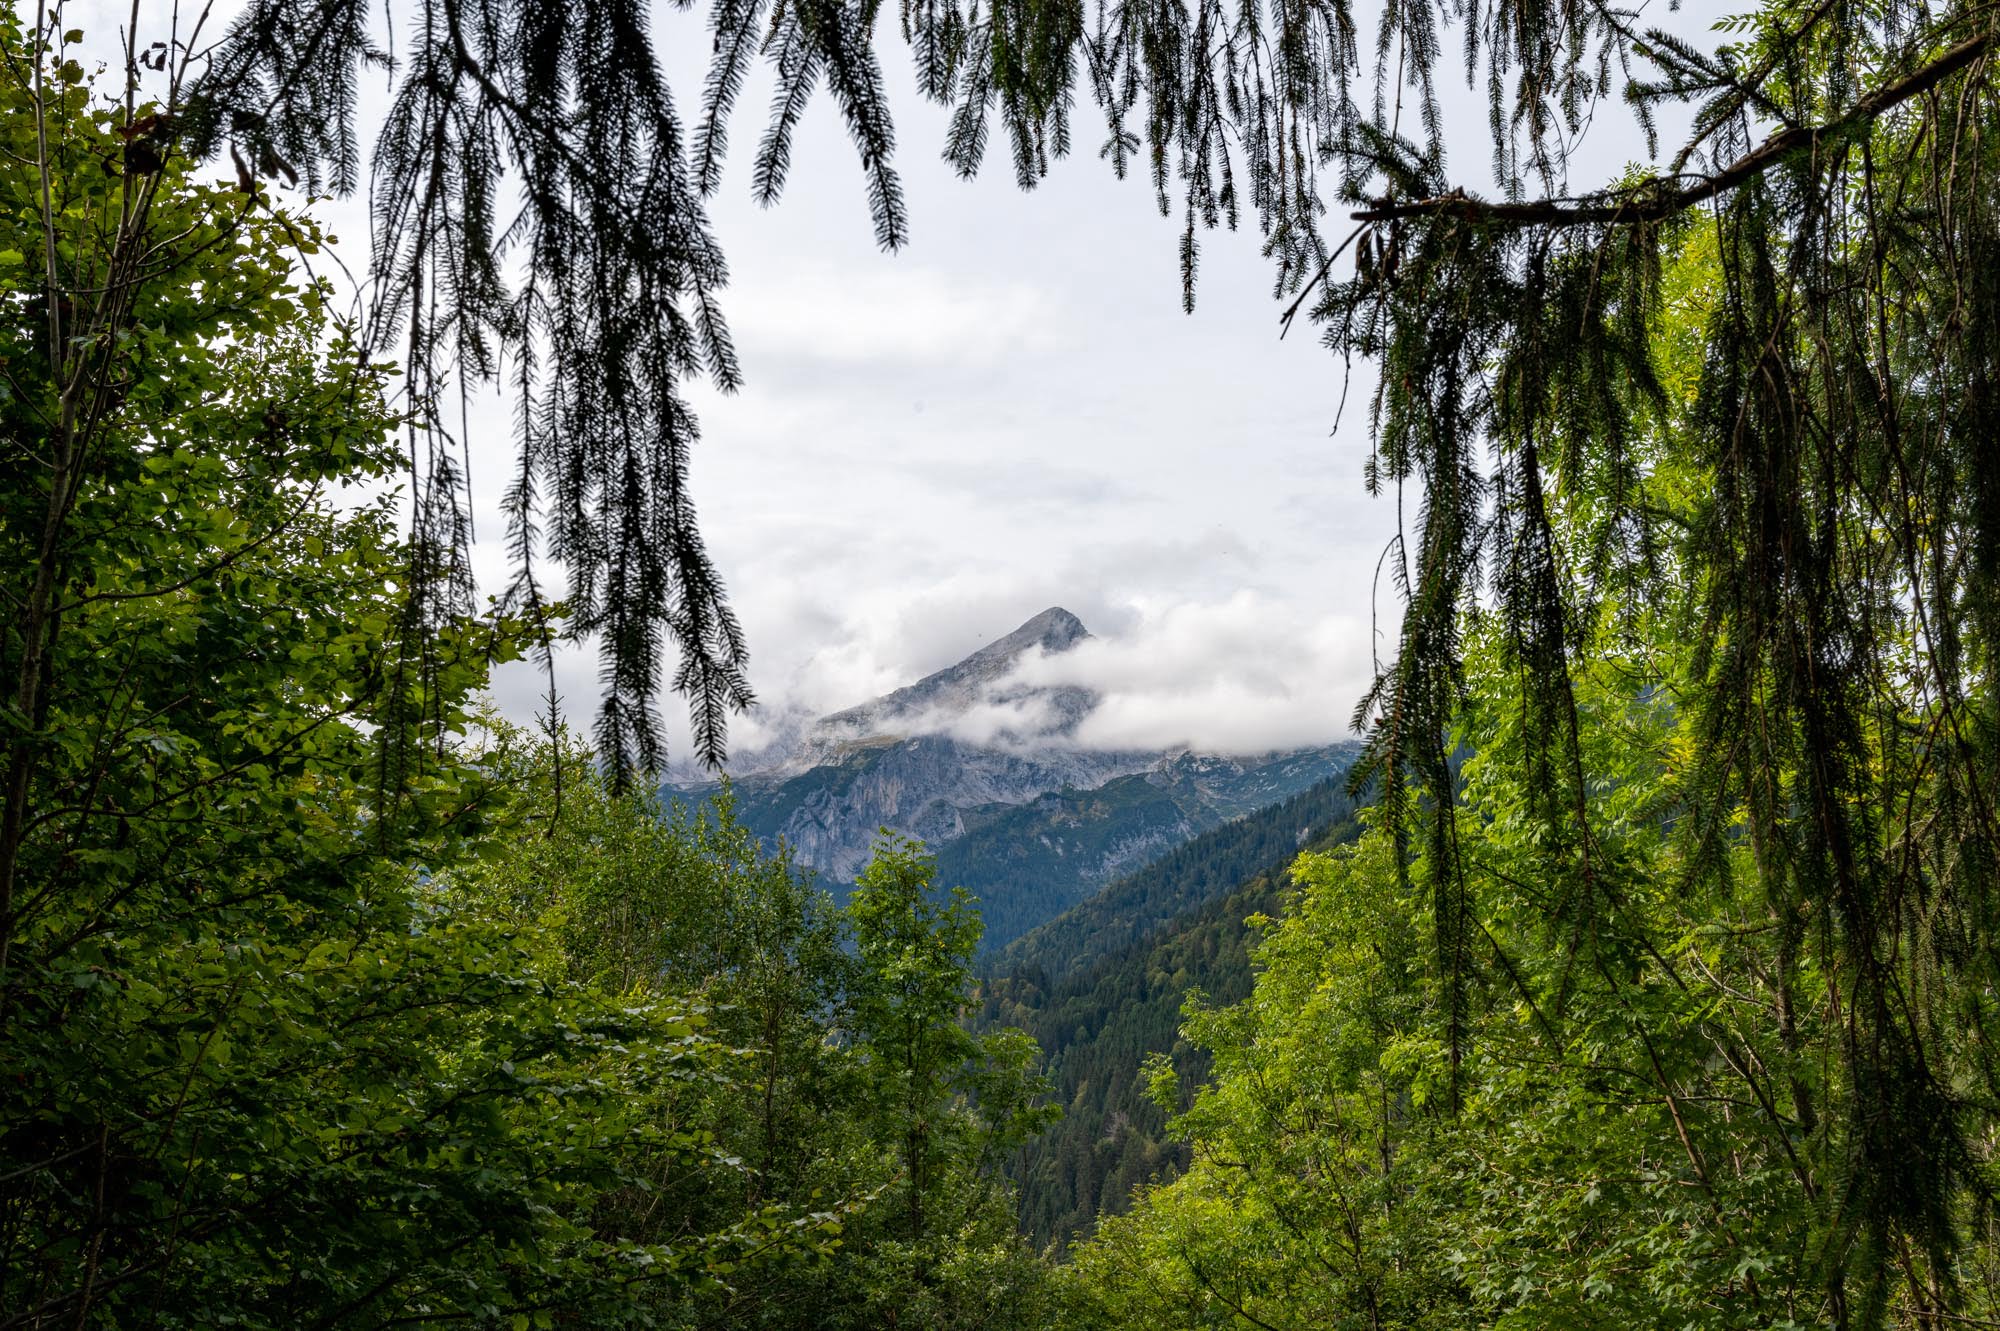 Mountain scene, Garmisch, Germany